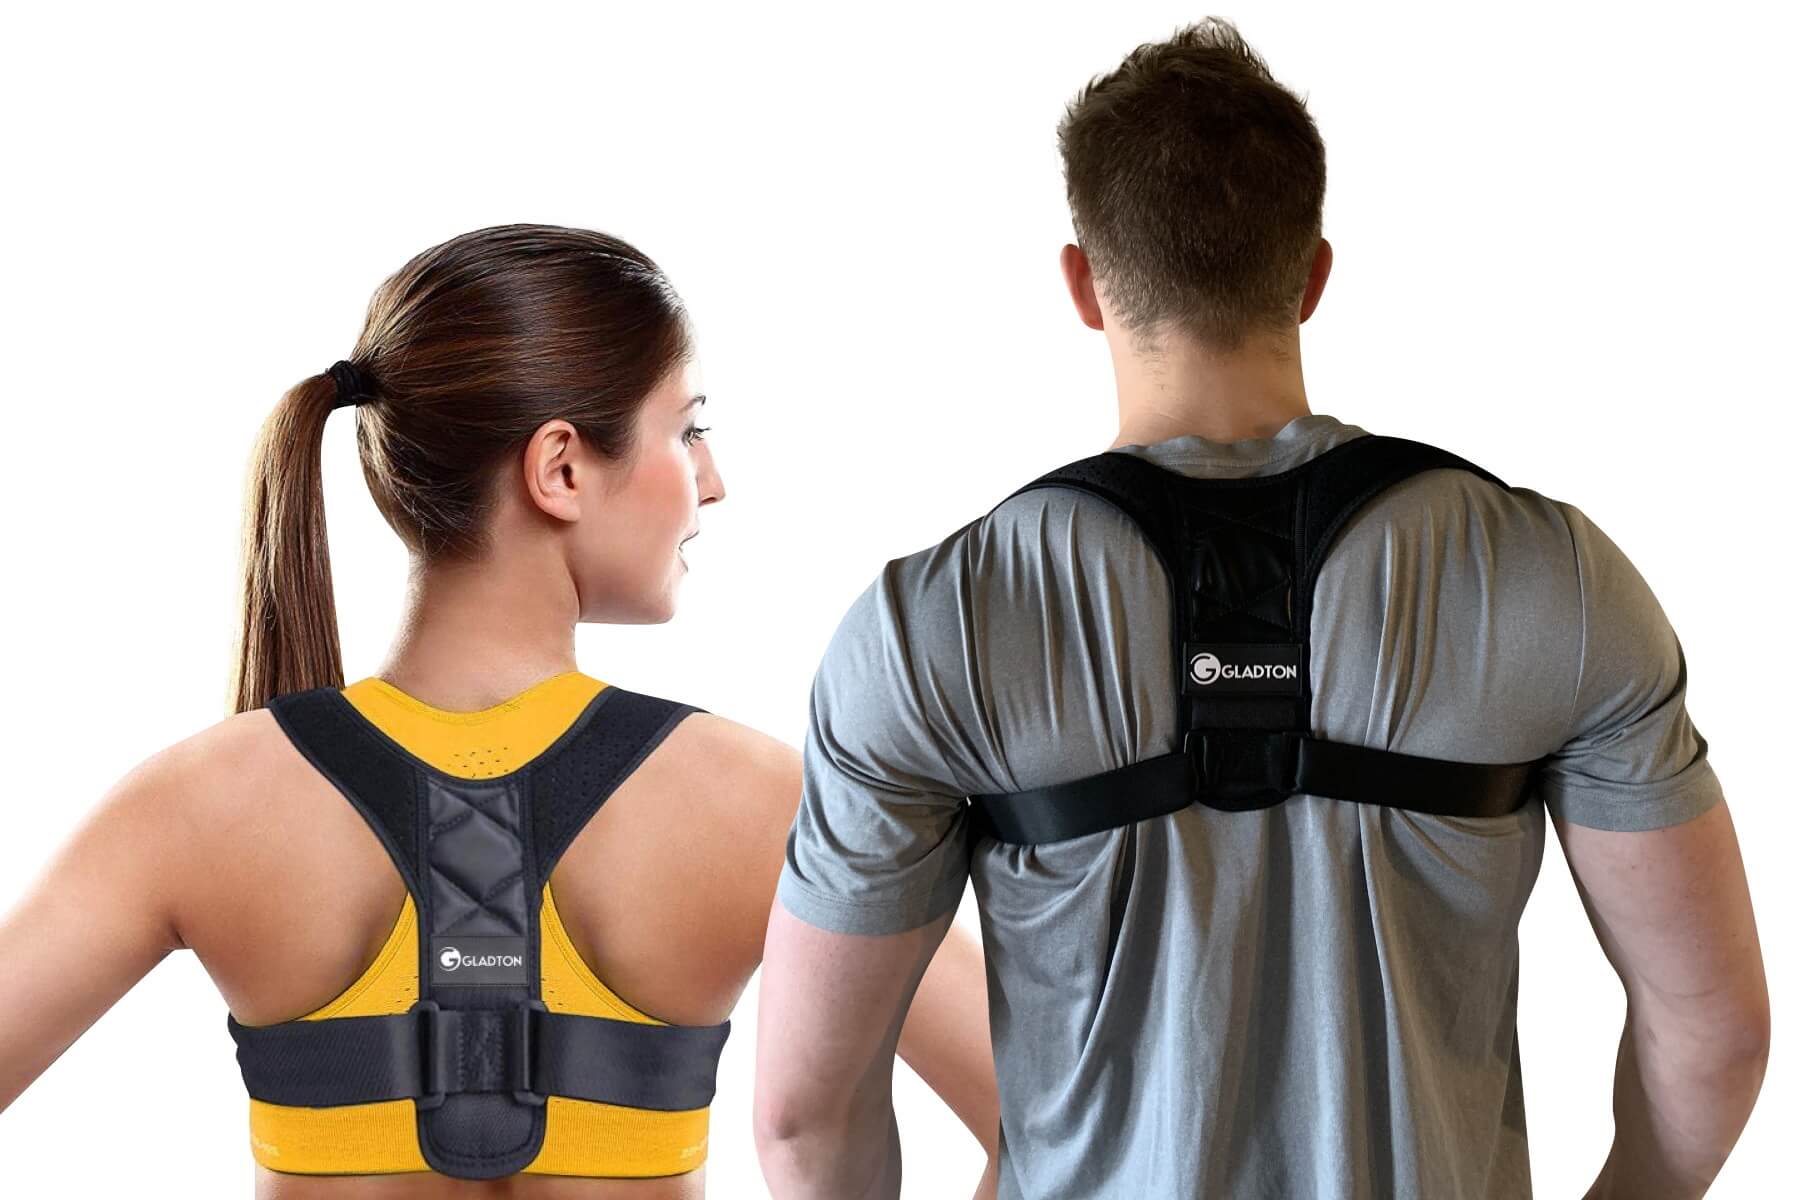 BraceTop Best Posture Corrector Corset Clavicle Spine Posture Correction  Back Support Belt Comfortable Soft Strip Corrector New